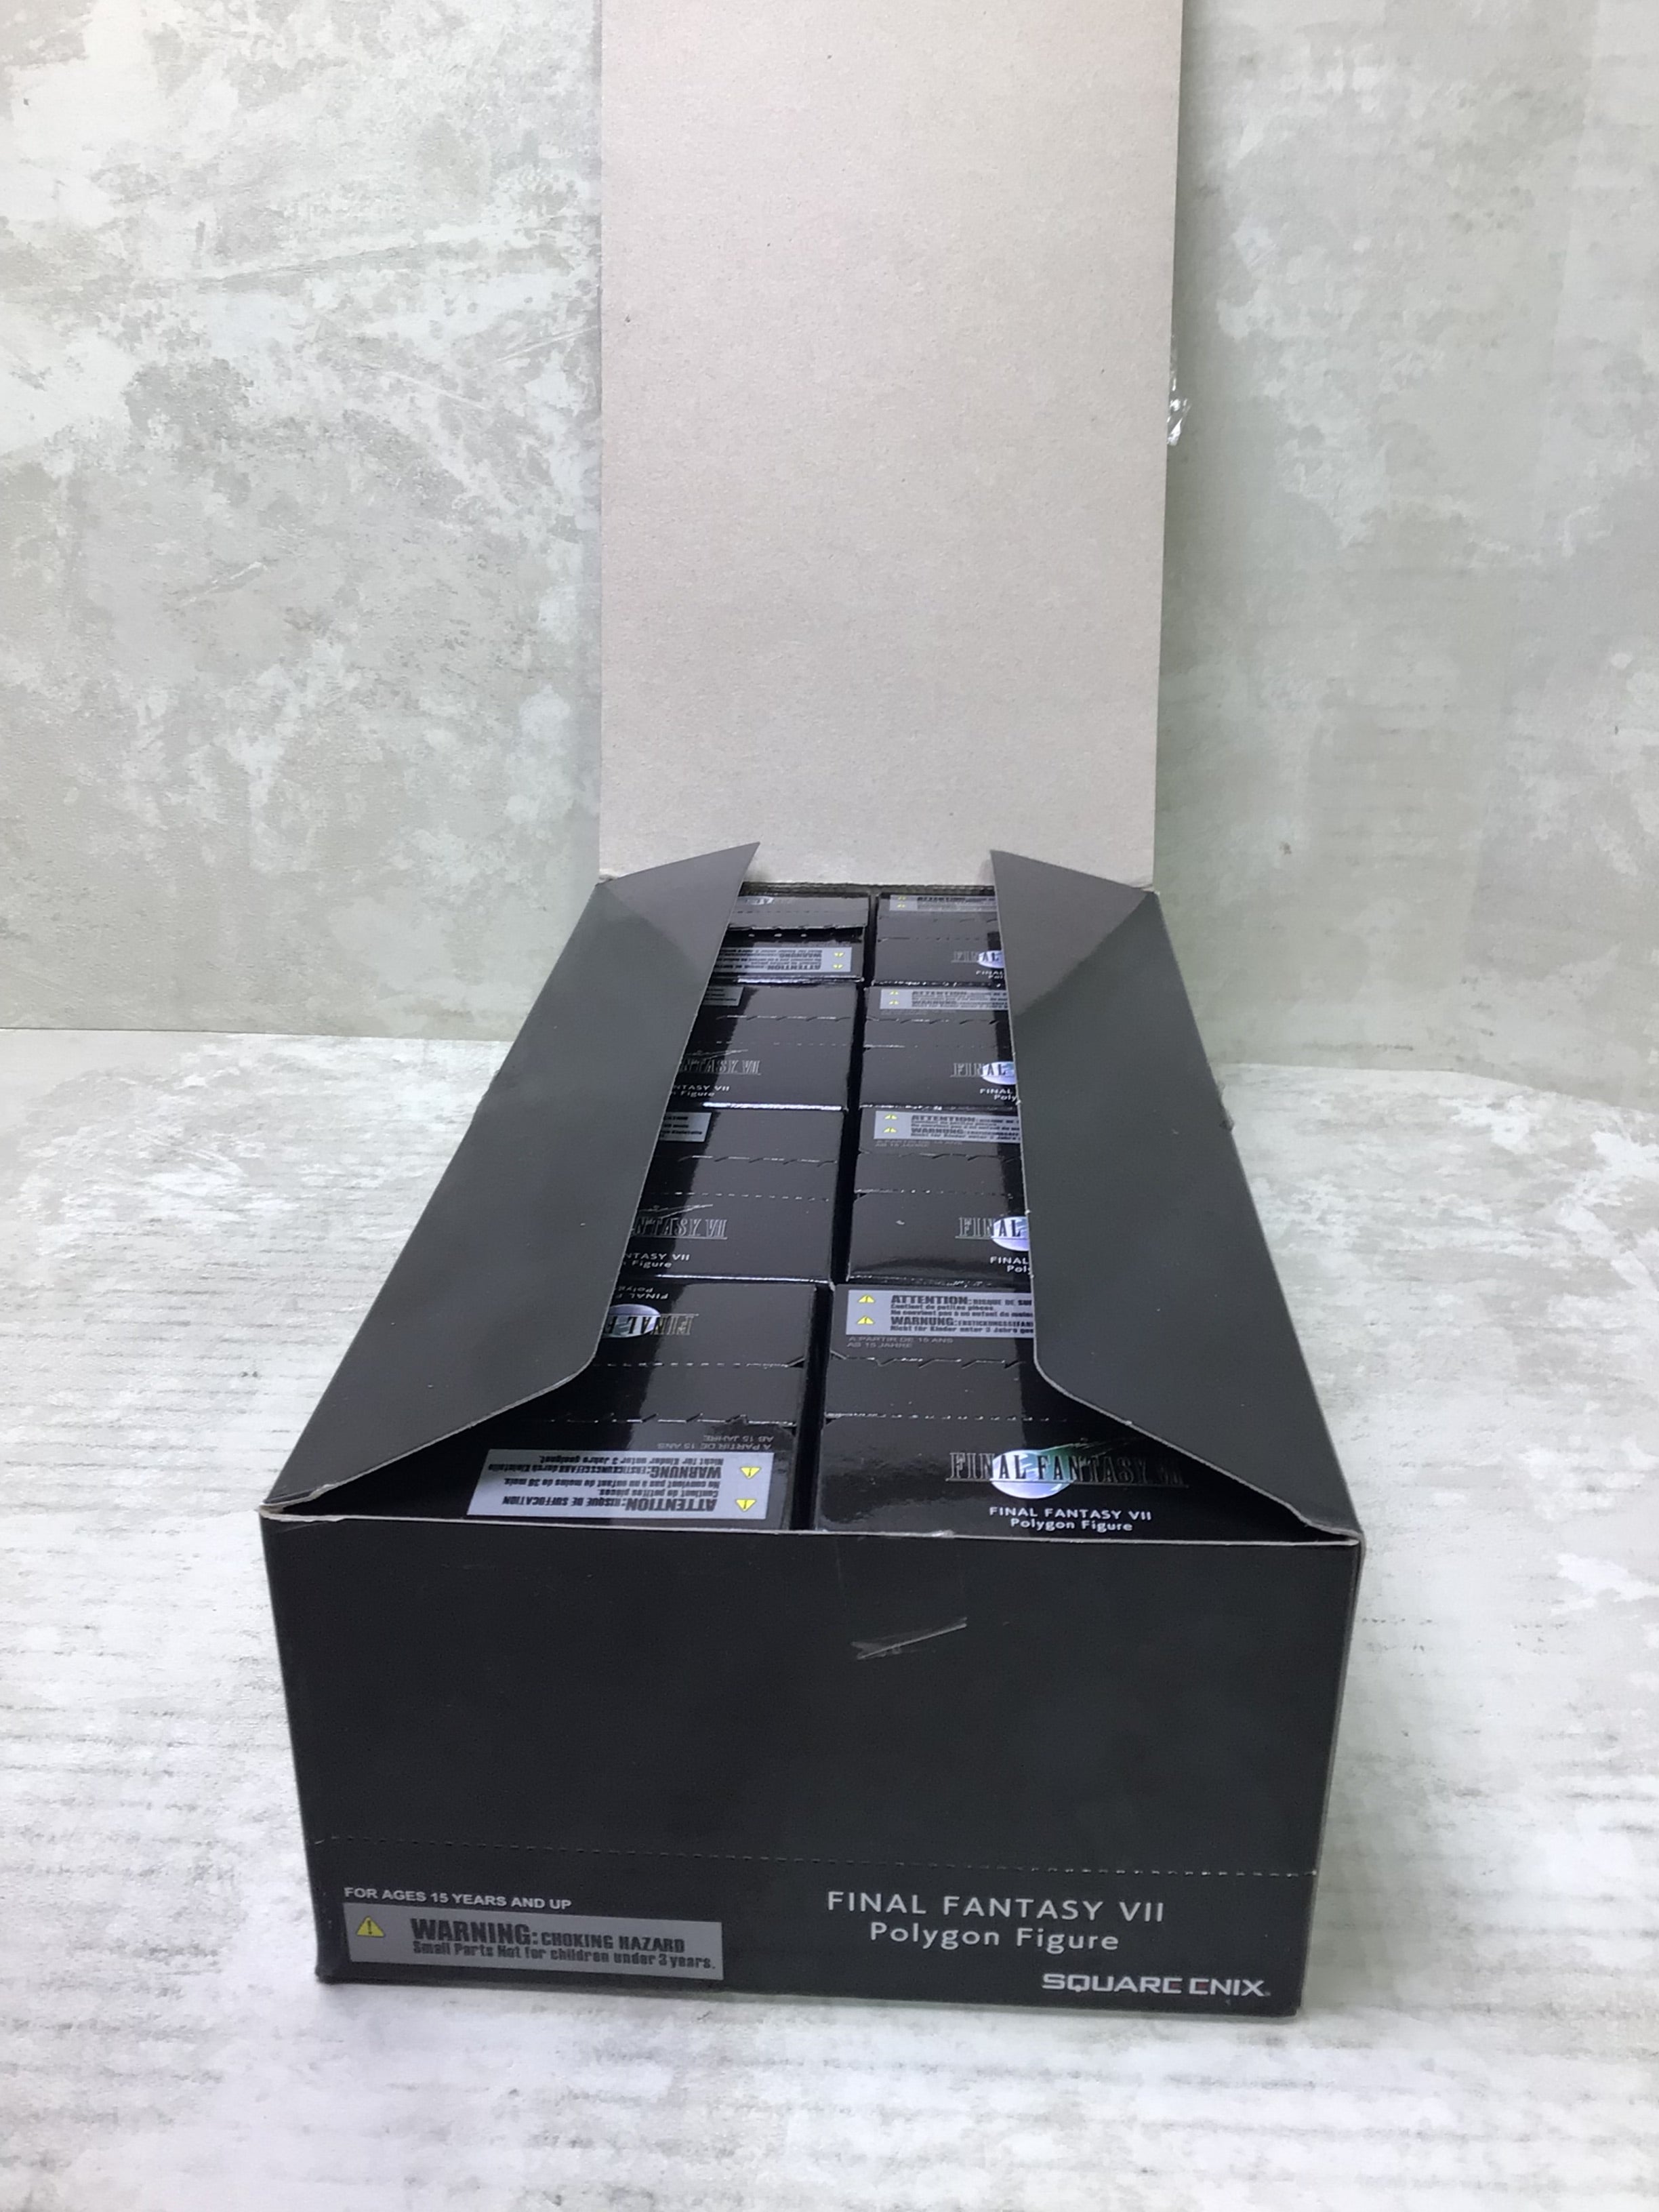 Square Enix Final Fantasy VII Polygon Figure (Blind Box) *One box opened* (7685064687854)